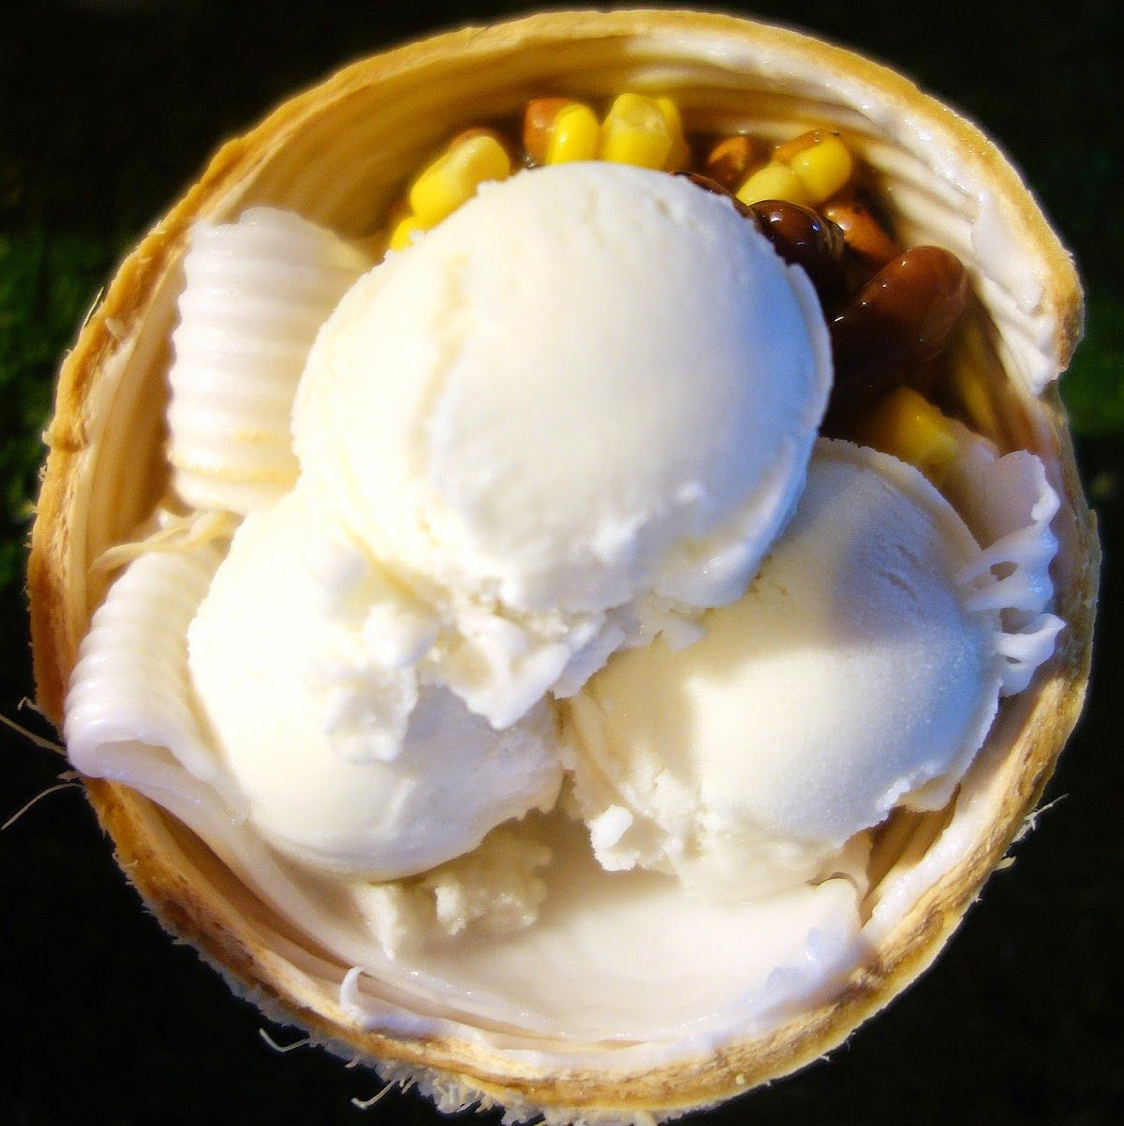  Coconut ice cream